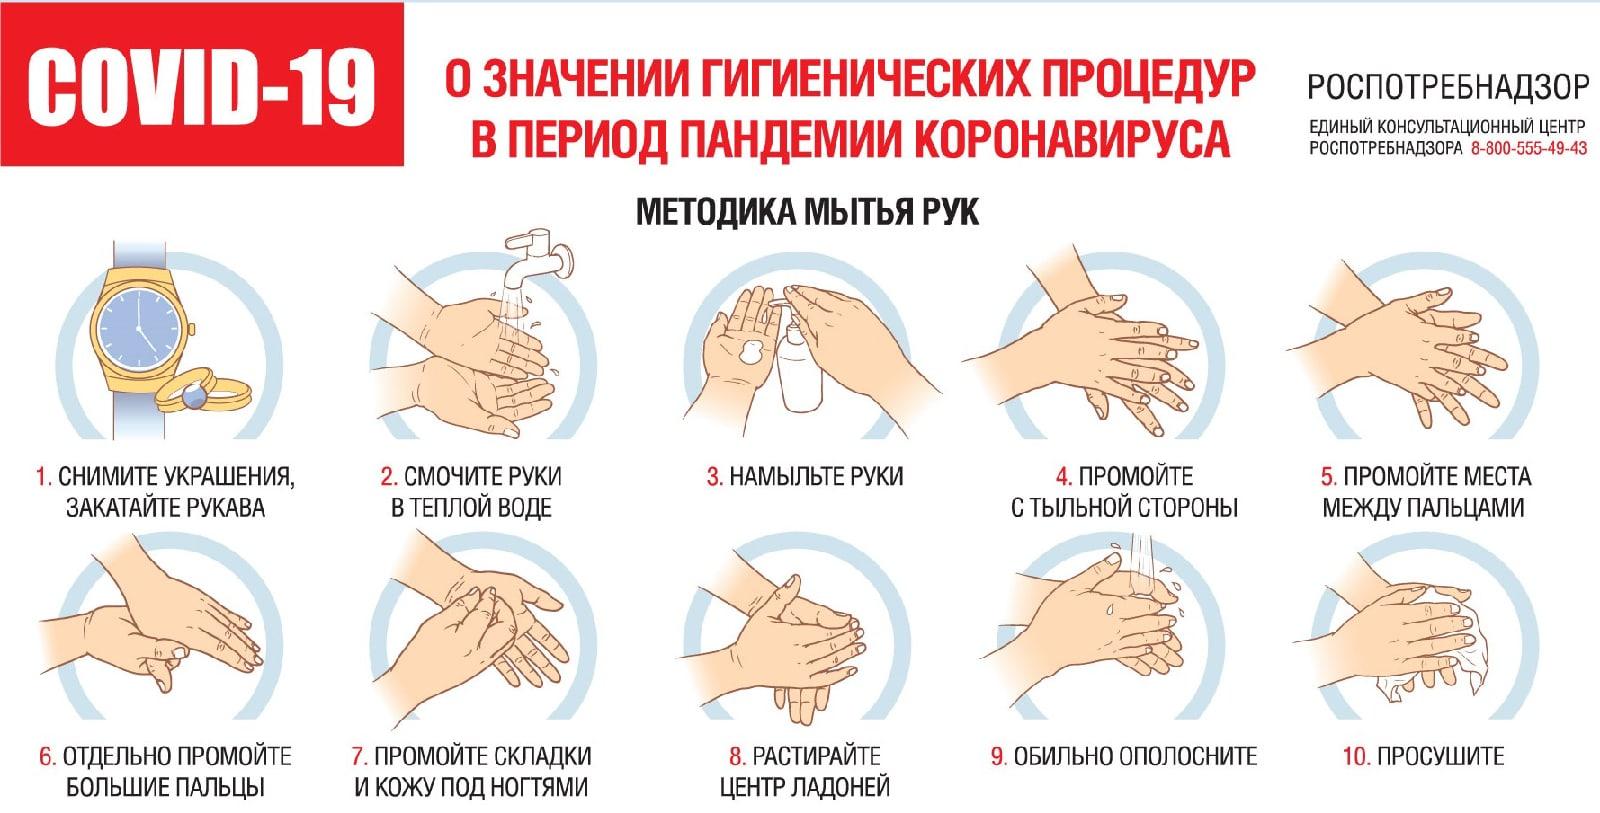 Мытье рук.jpg